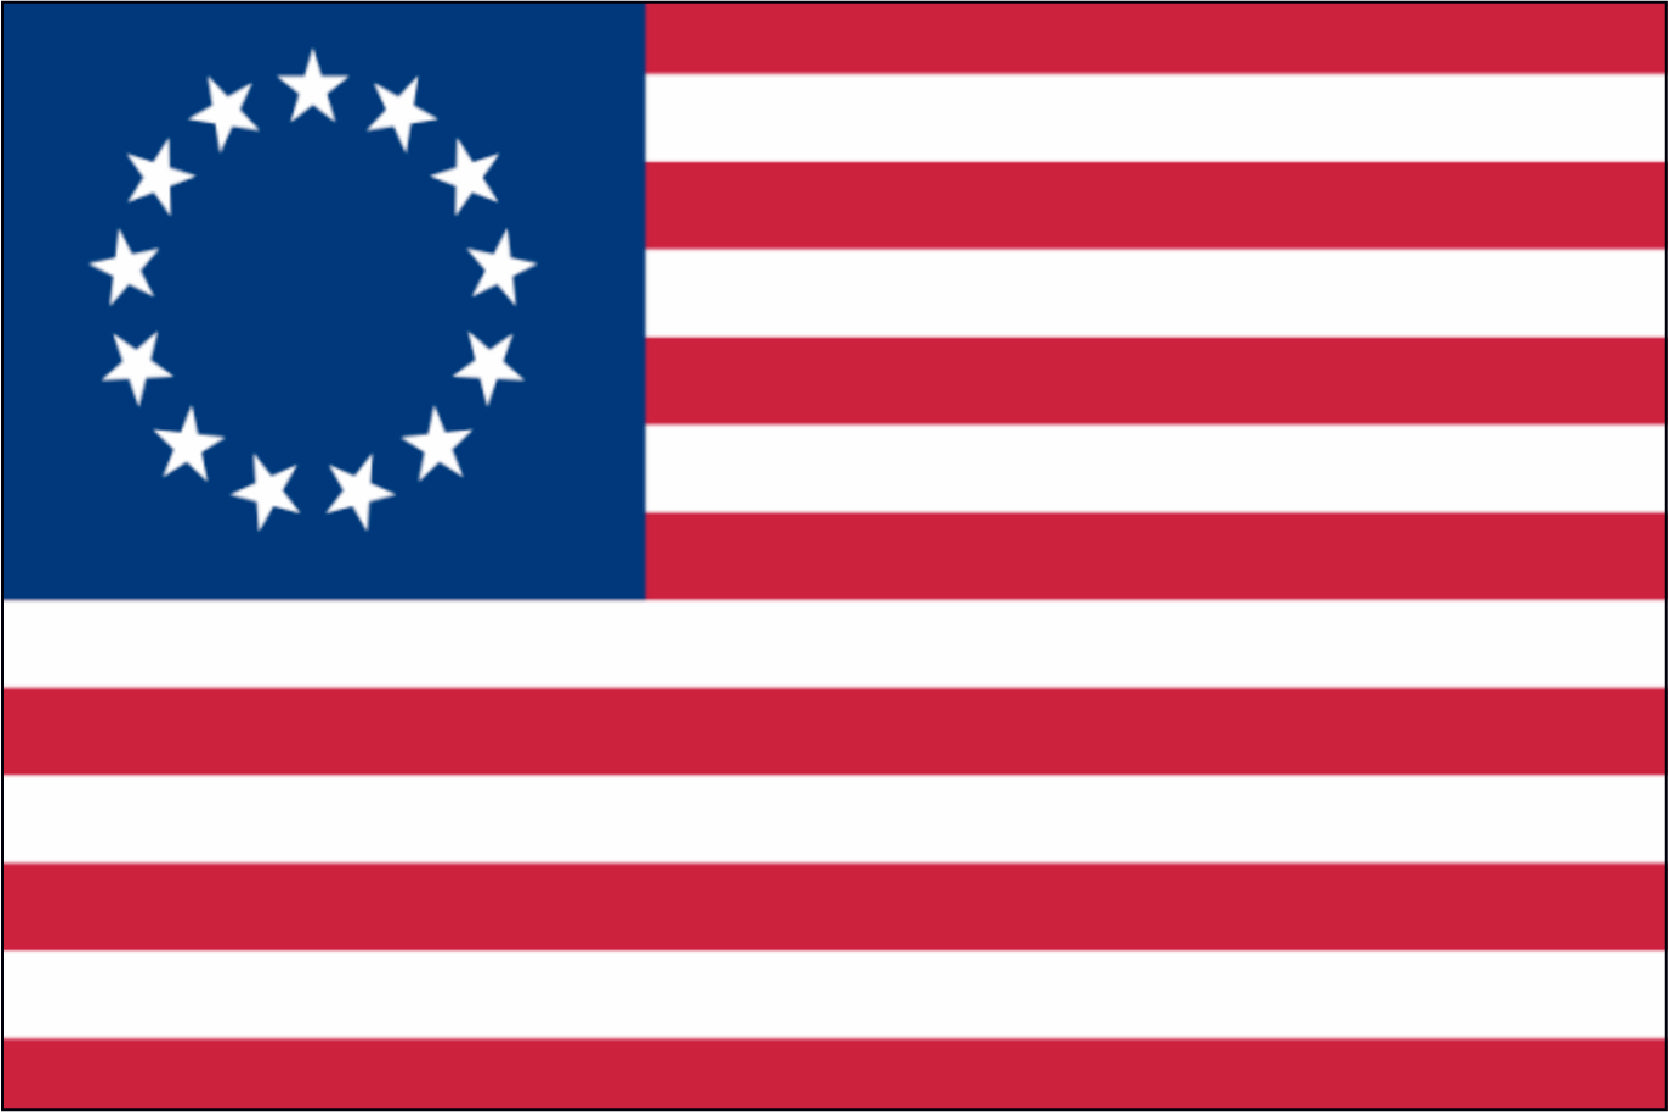 Betsy Ross flag, original US flag